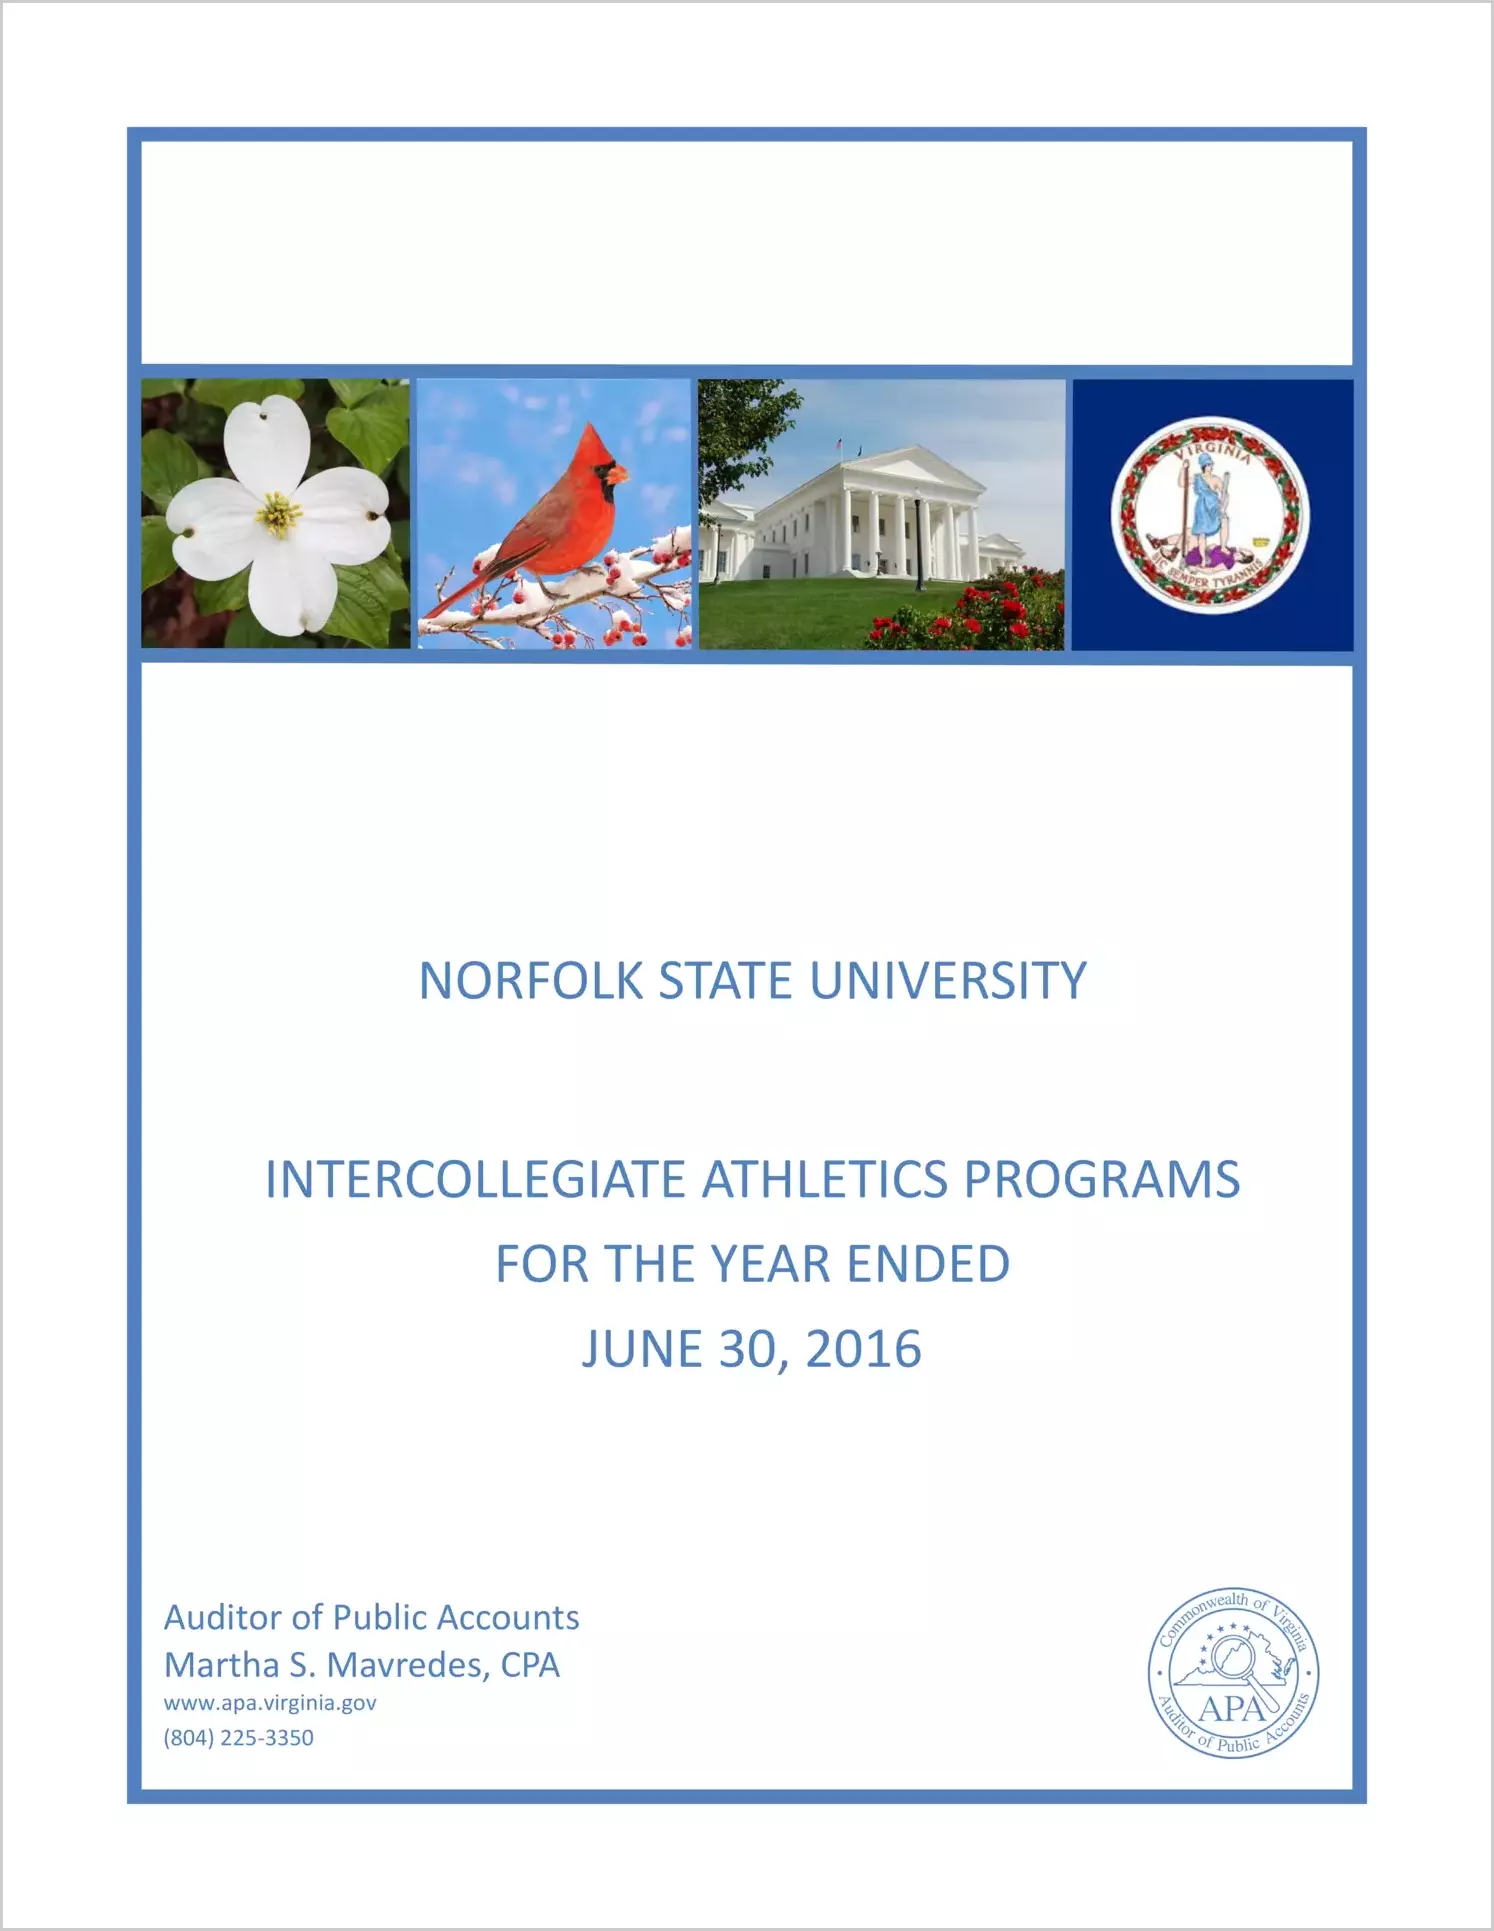 Norfolk State University Intercollegiate Athletics Programs for the year ended June 30, 2016